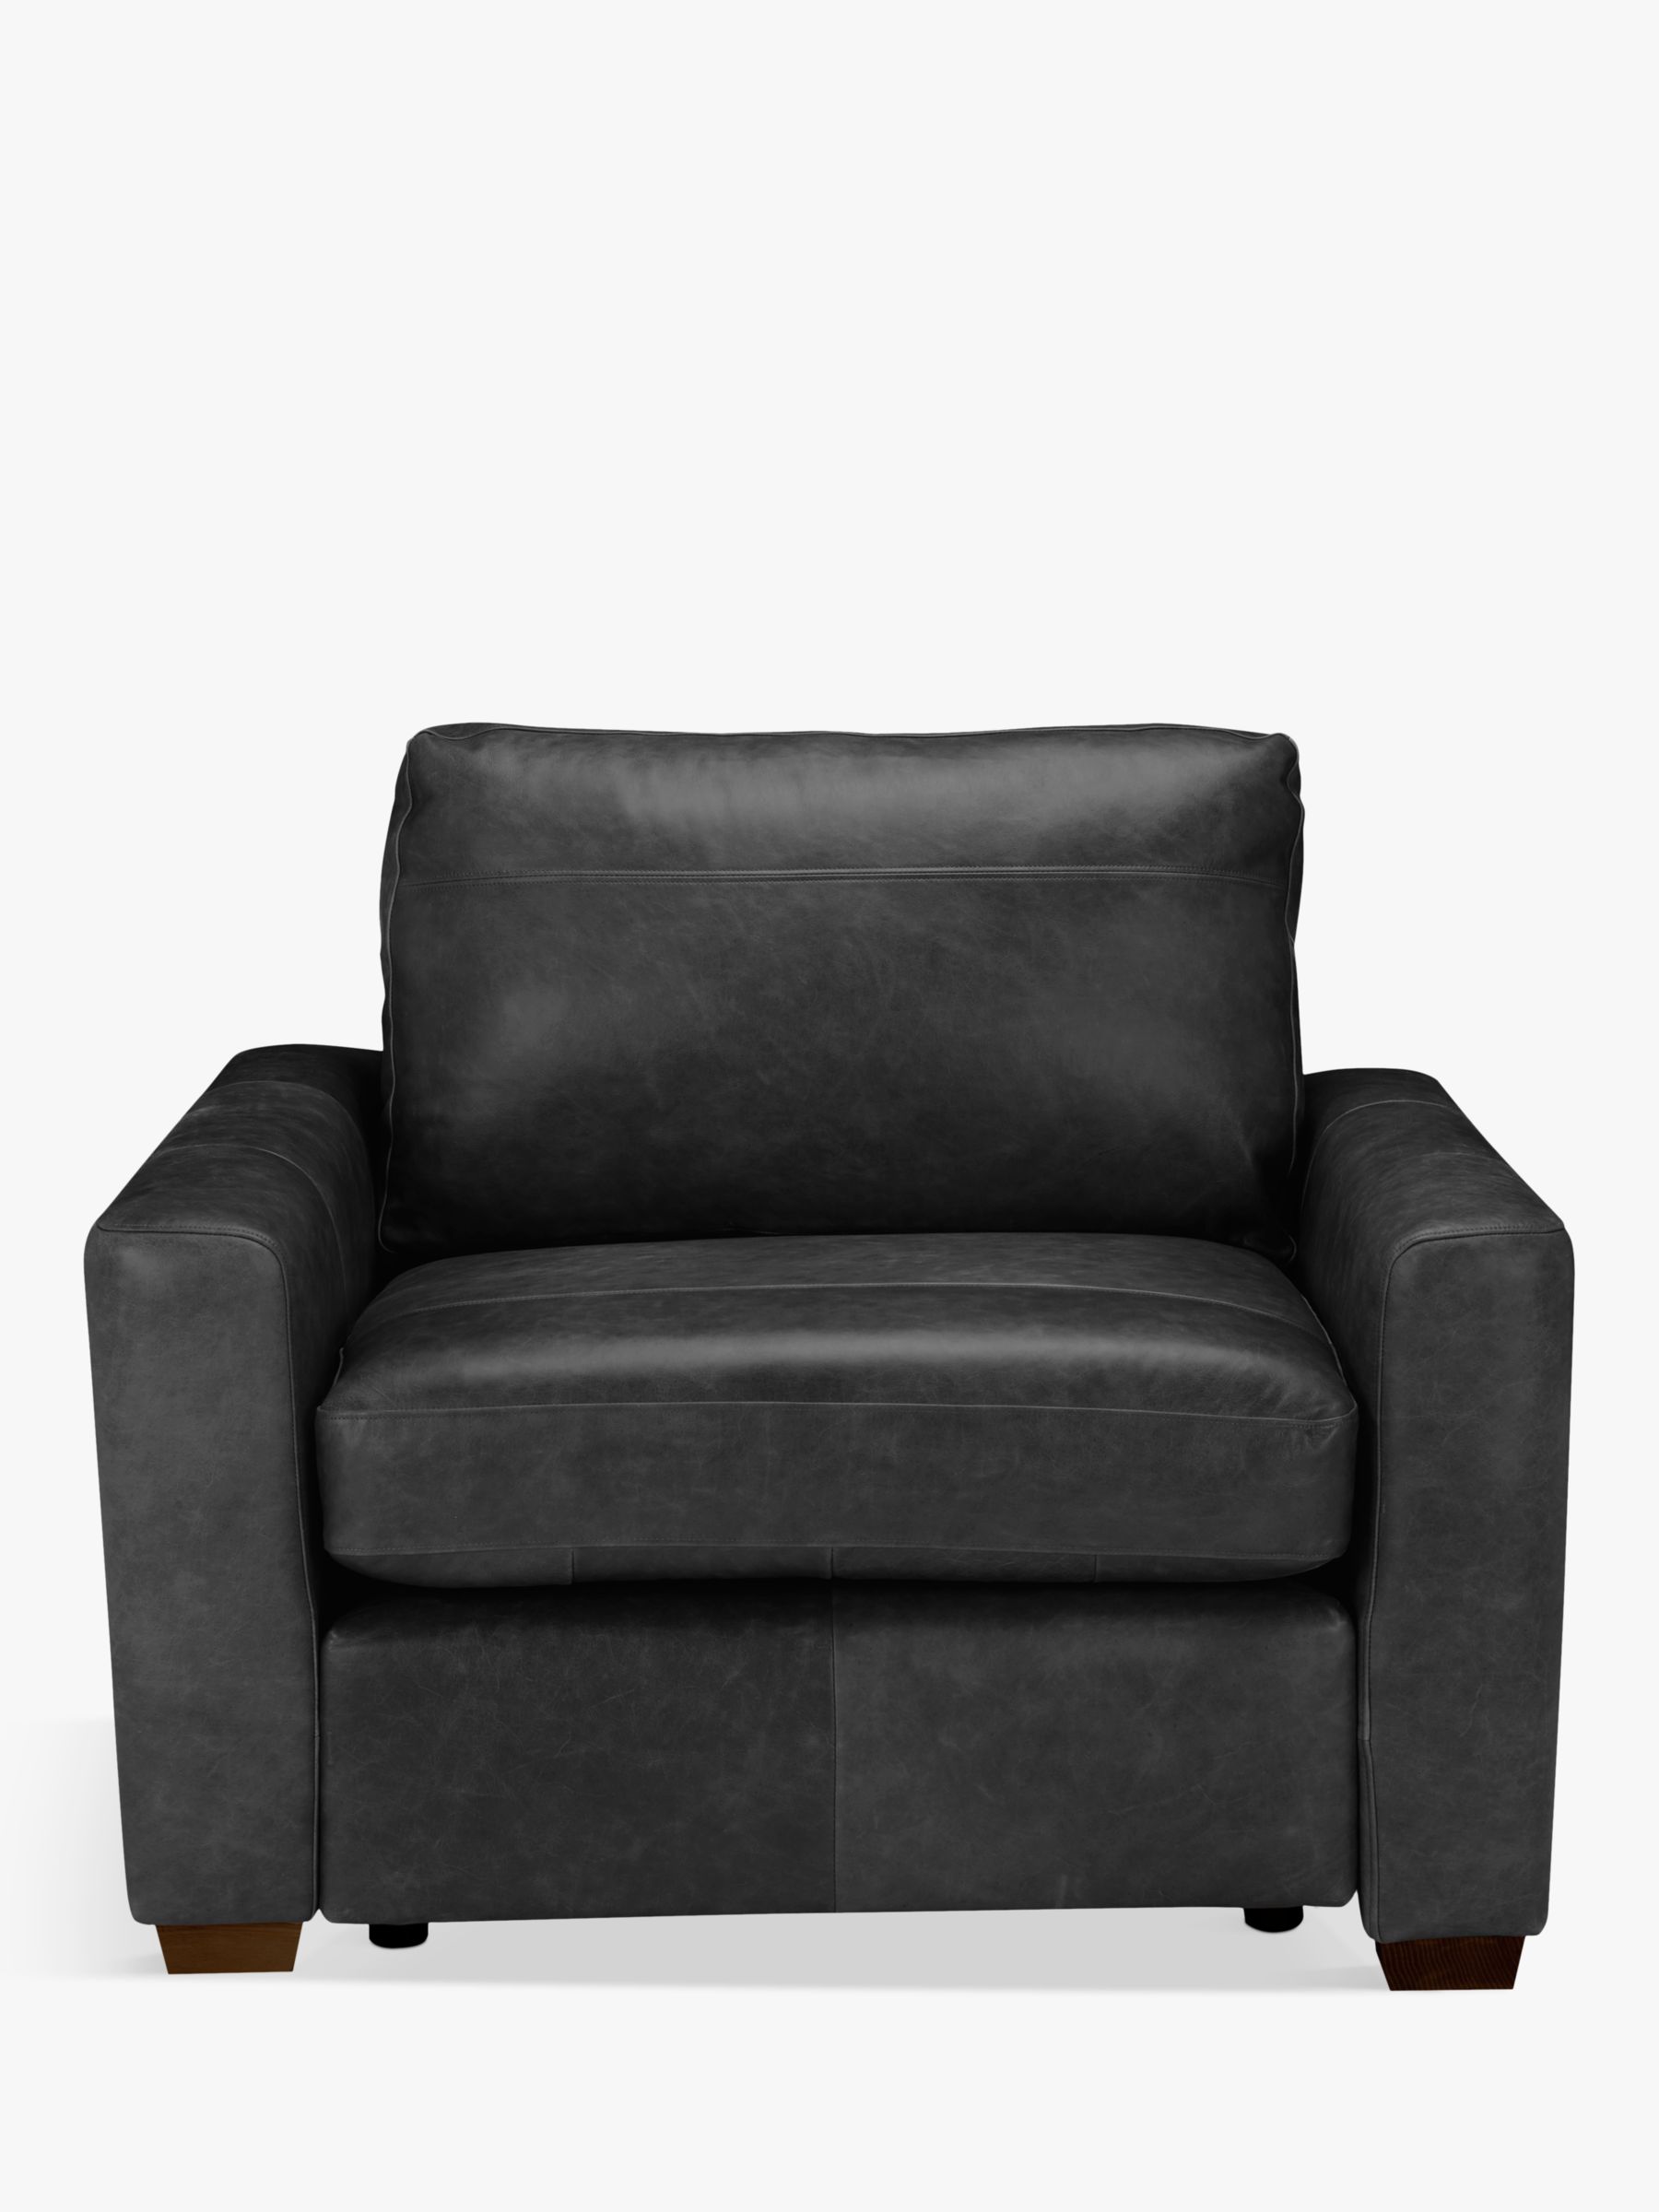 Oliver Range, John Lewis Oliver Leather Armchair, Dark Leg, Contempo Black